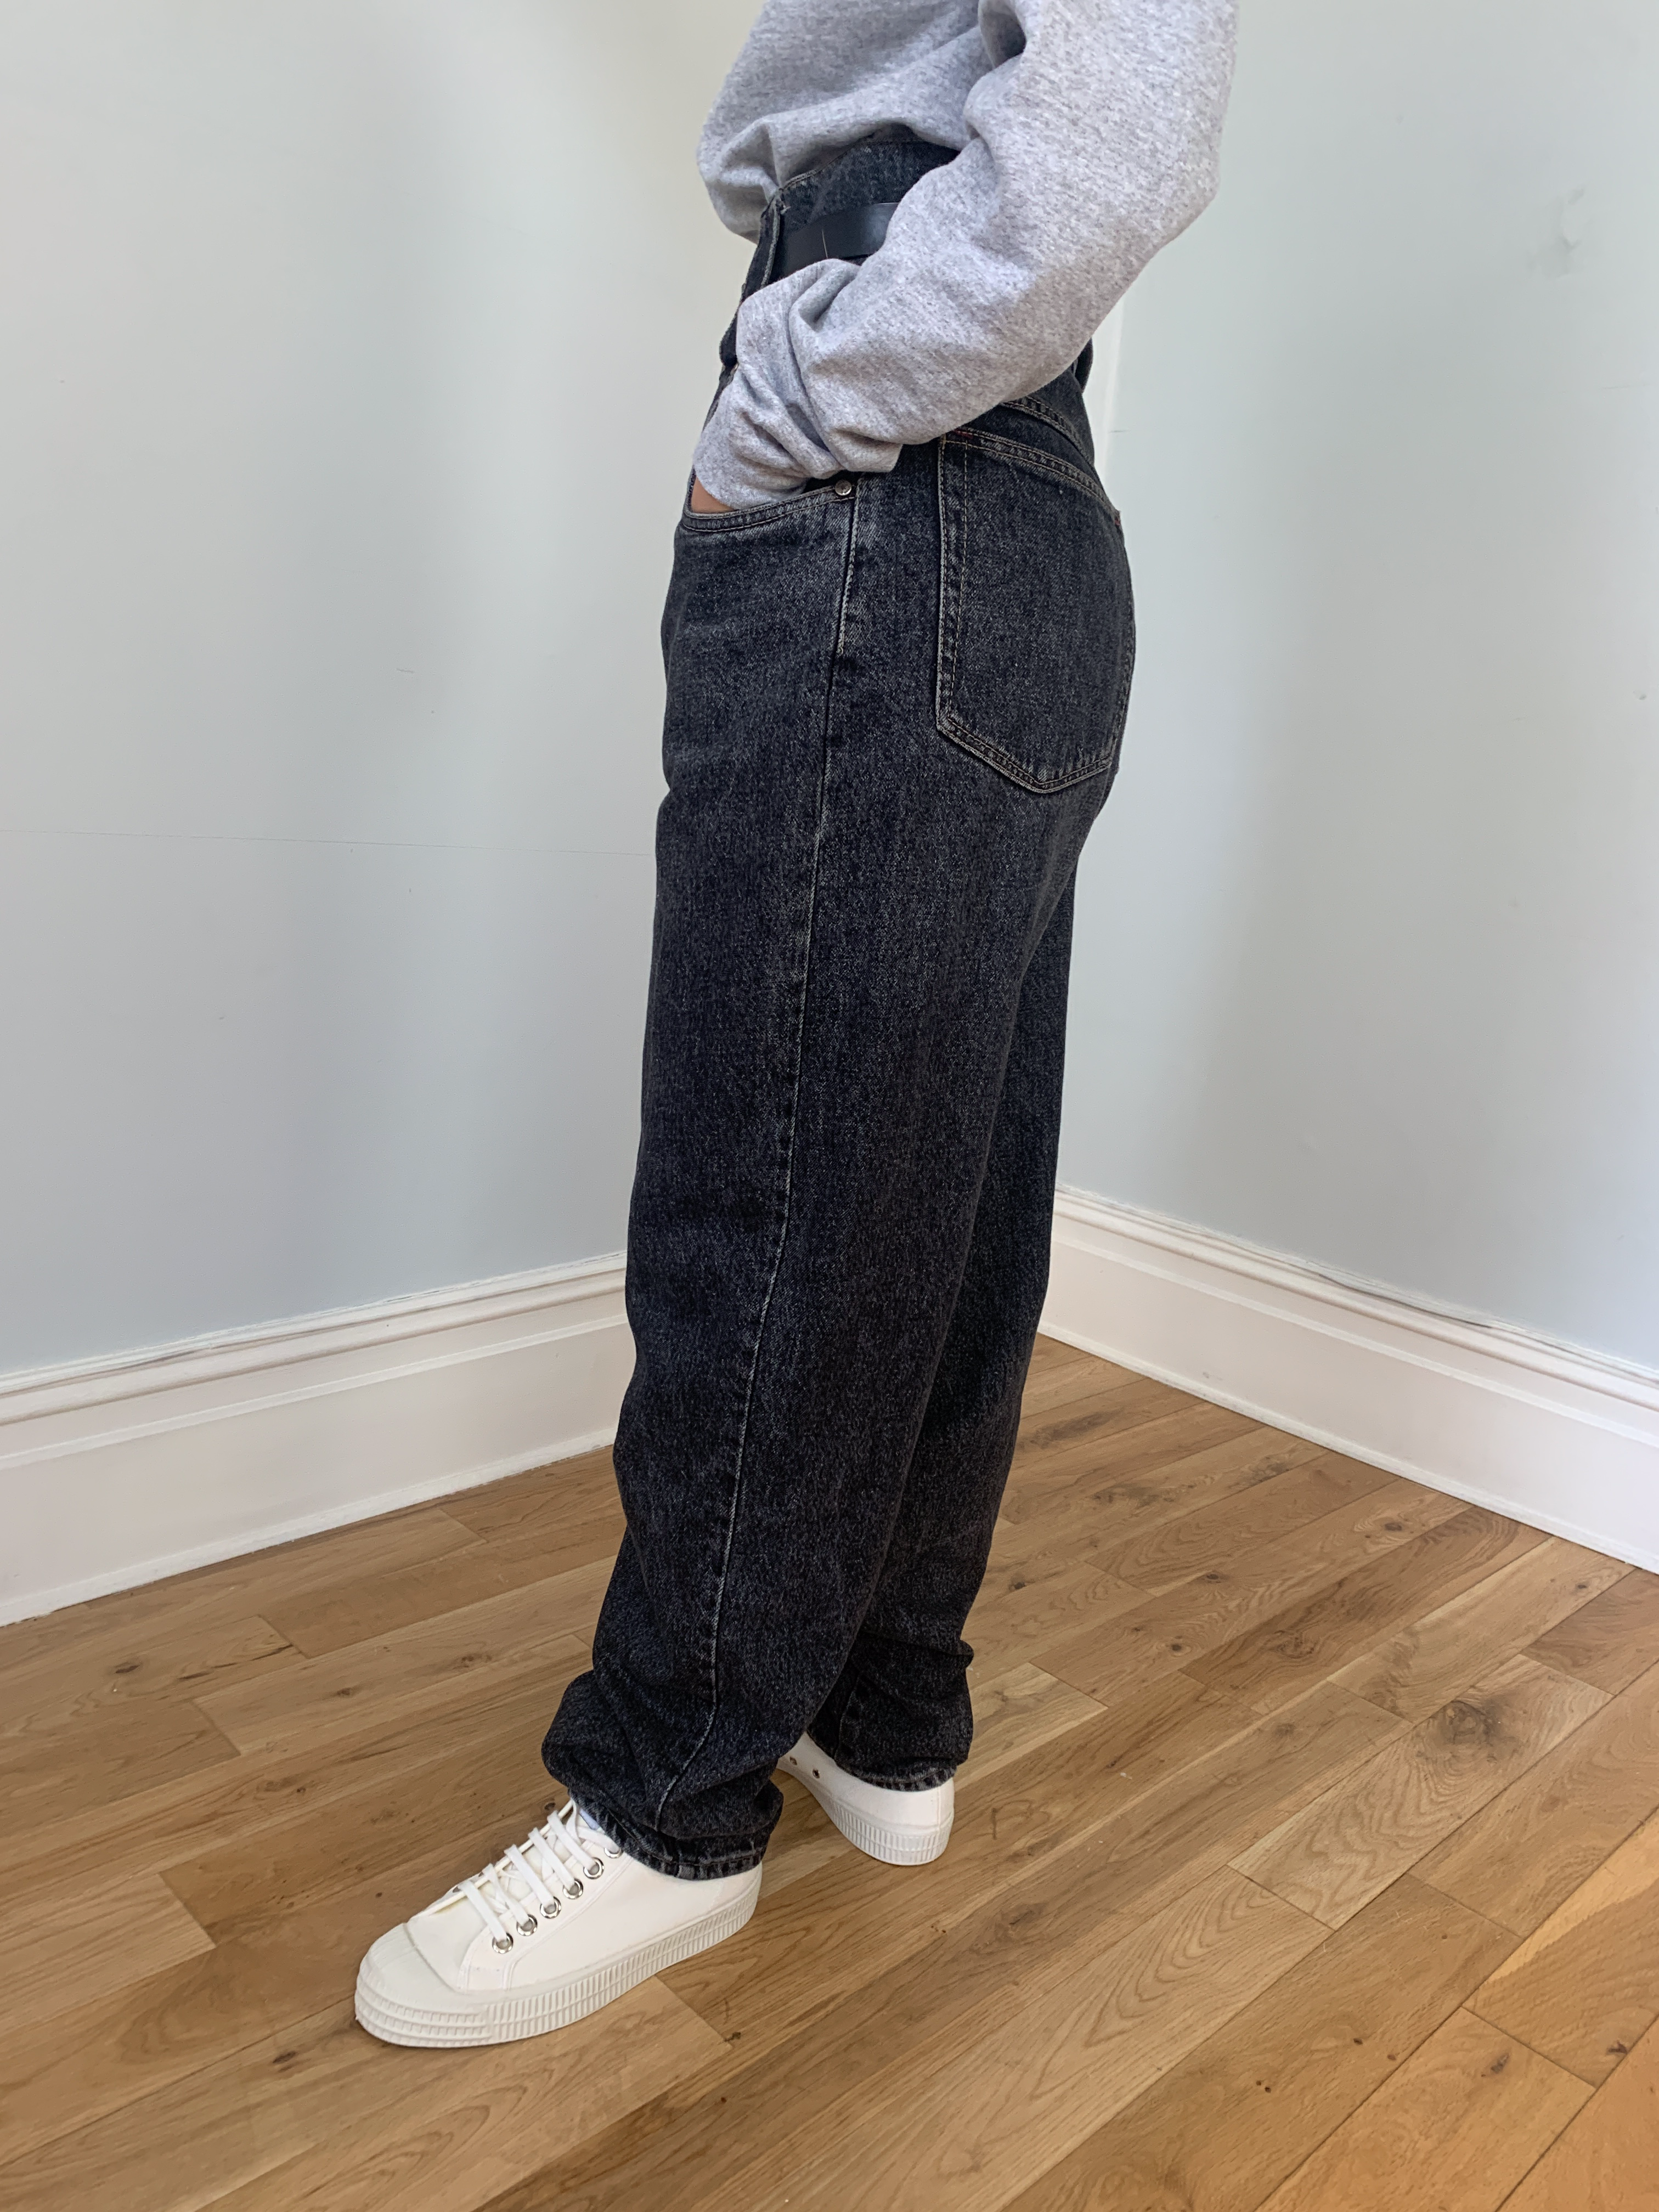 Jonny Q oversized 90s high waisted jeans